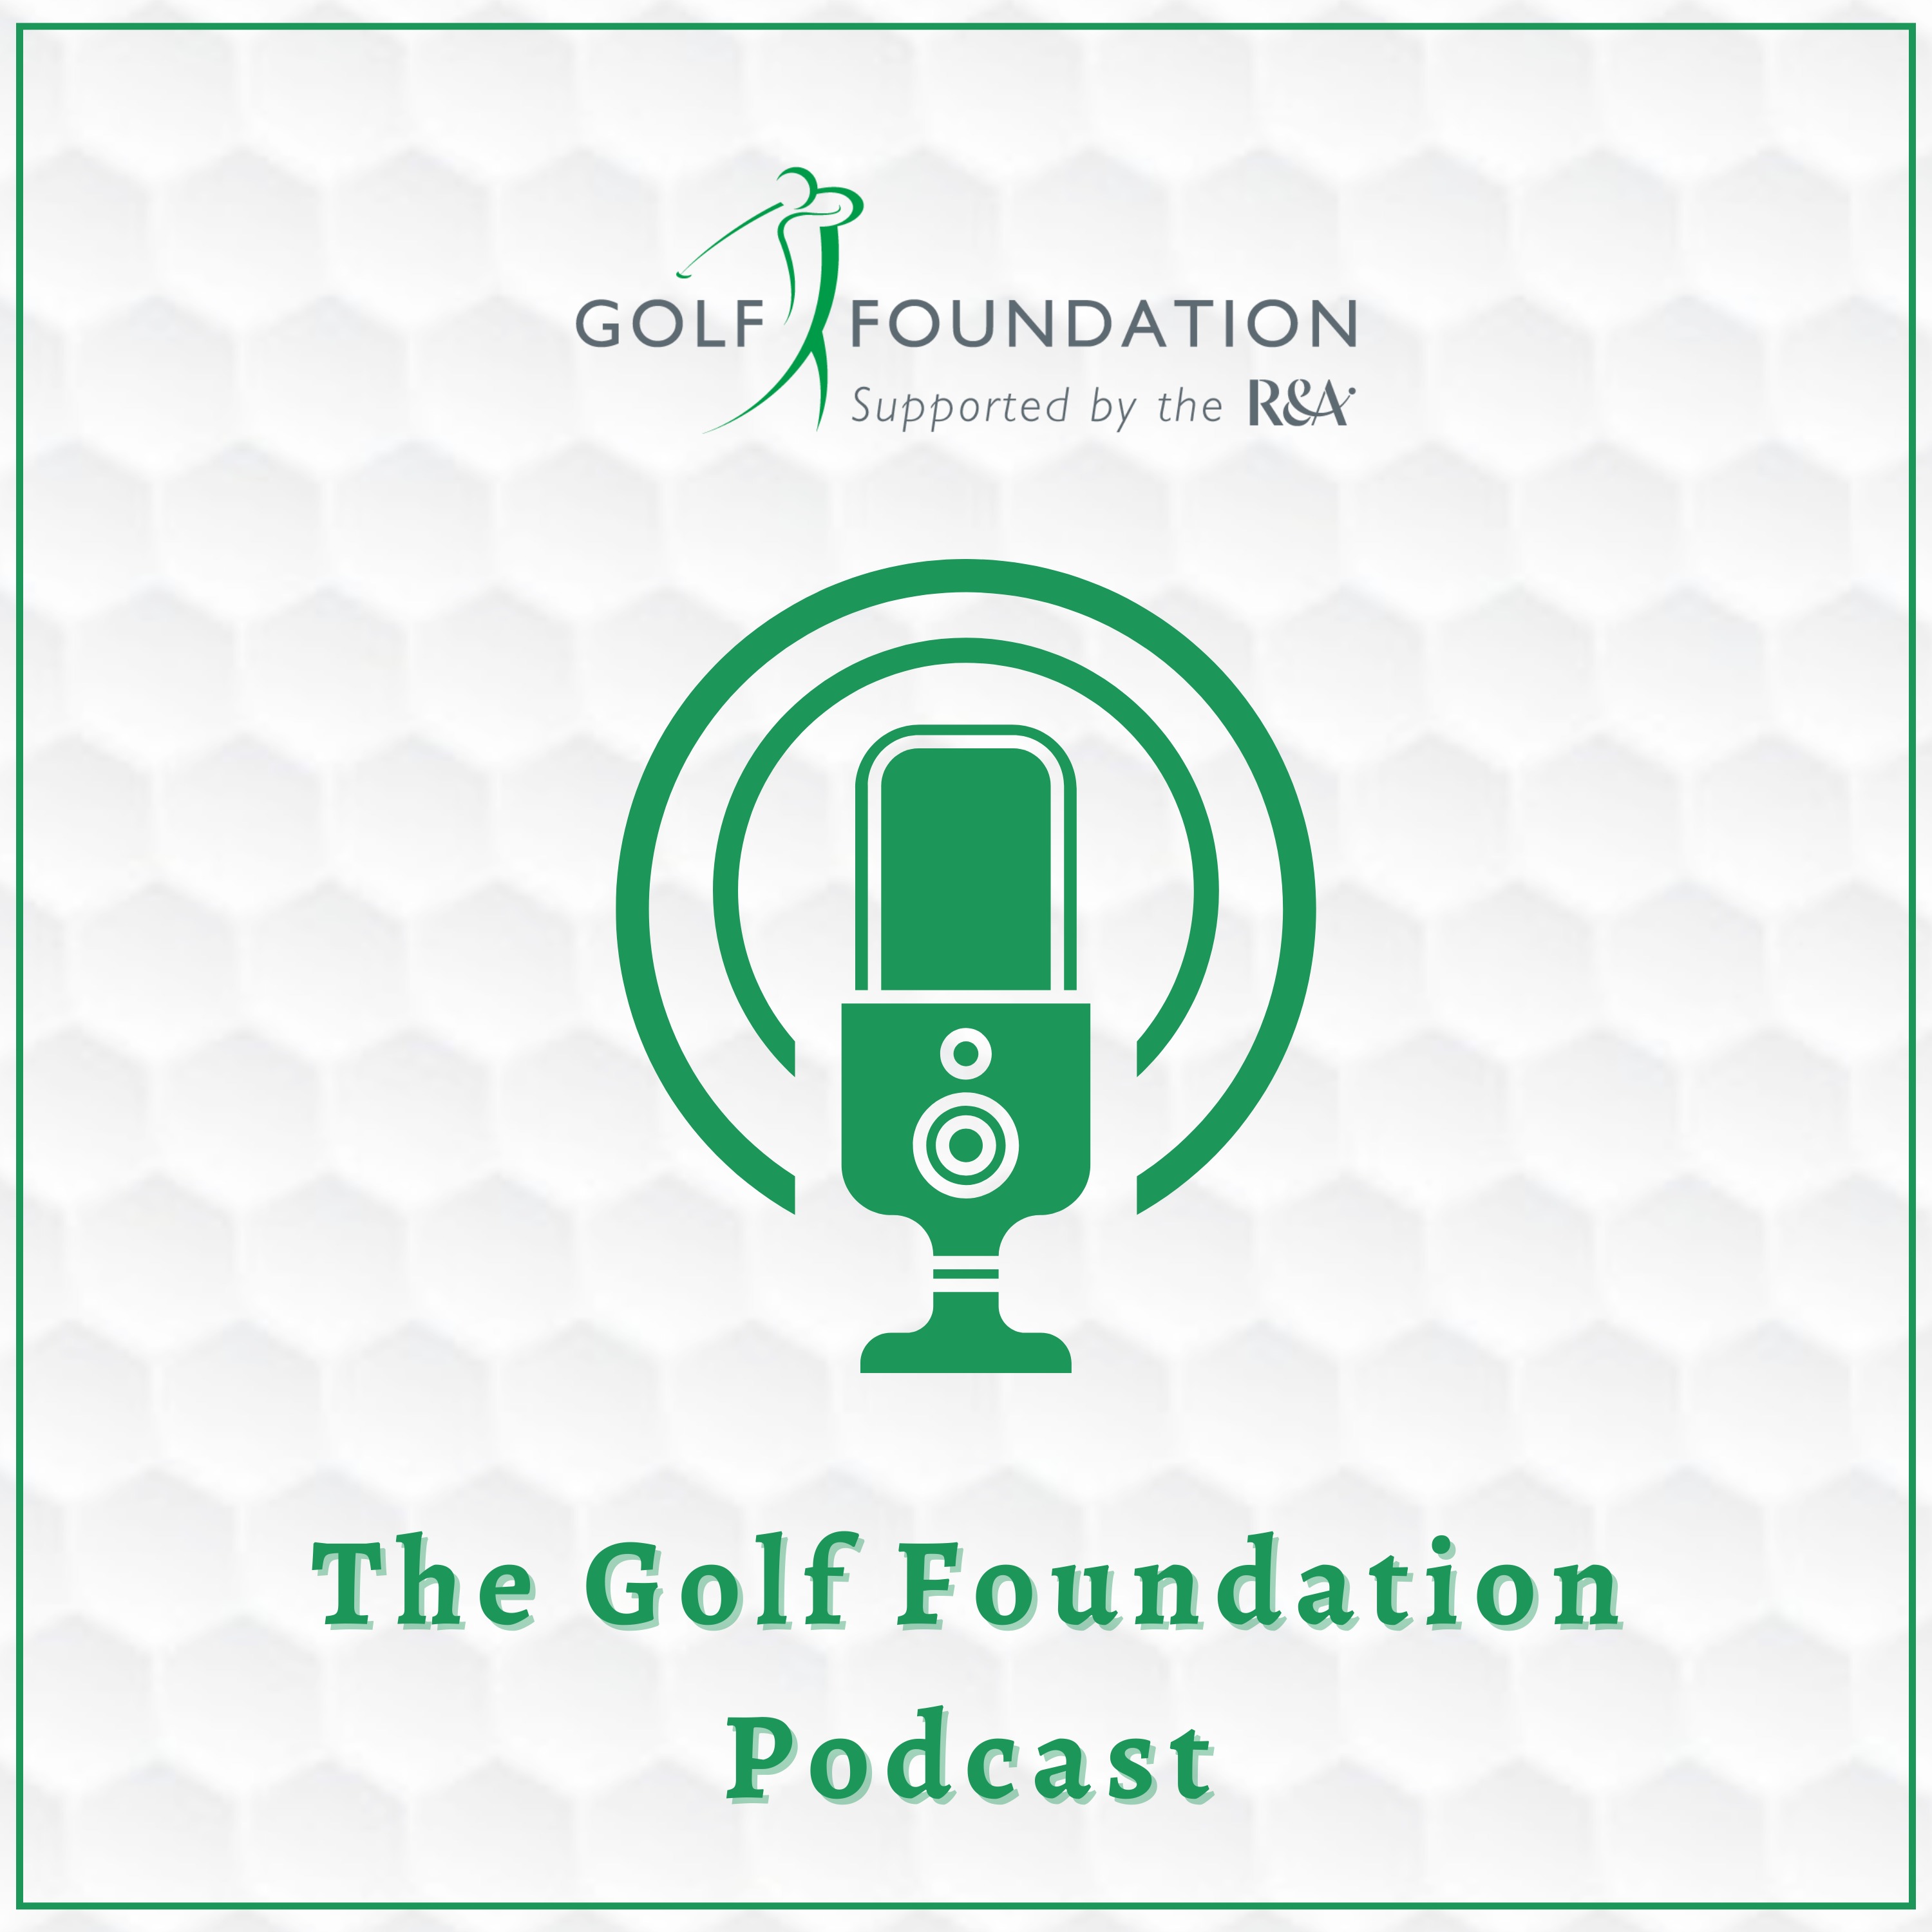 The Golf Foundation